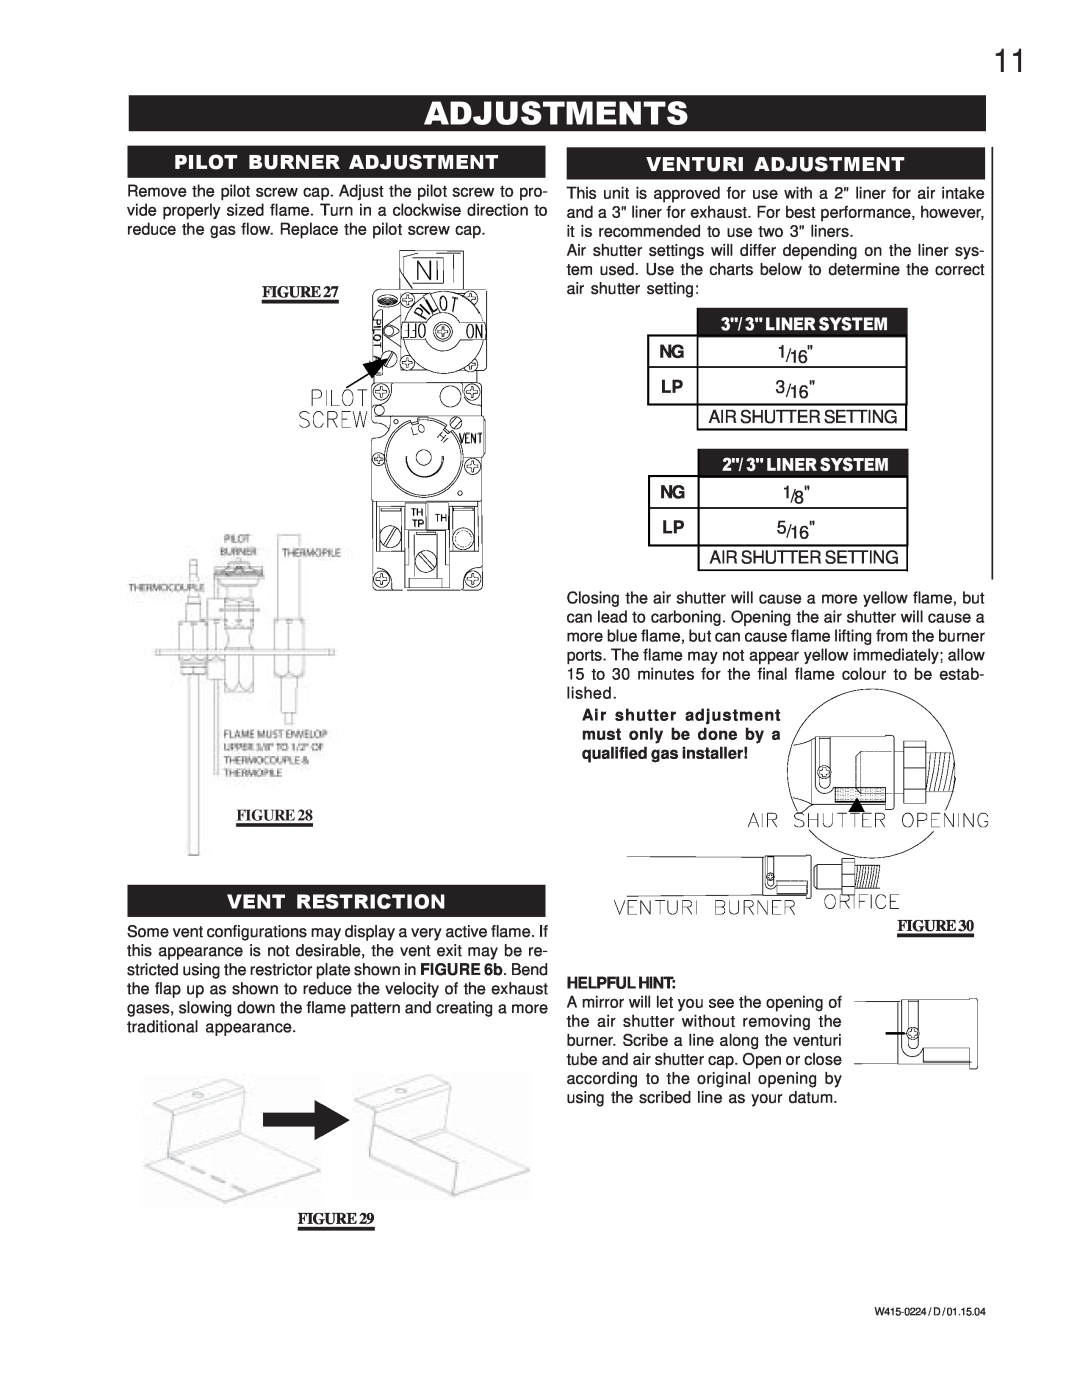 Continental CDIZC - P manual Adjustments, Pilot Burner Adjustment, Vent Restriction, Venturi Adjustment, 3/3LINERSYSTEM 